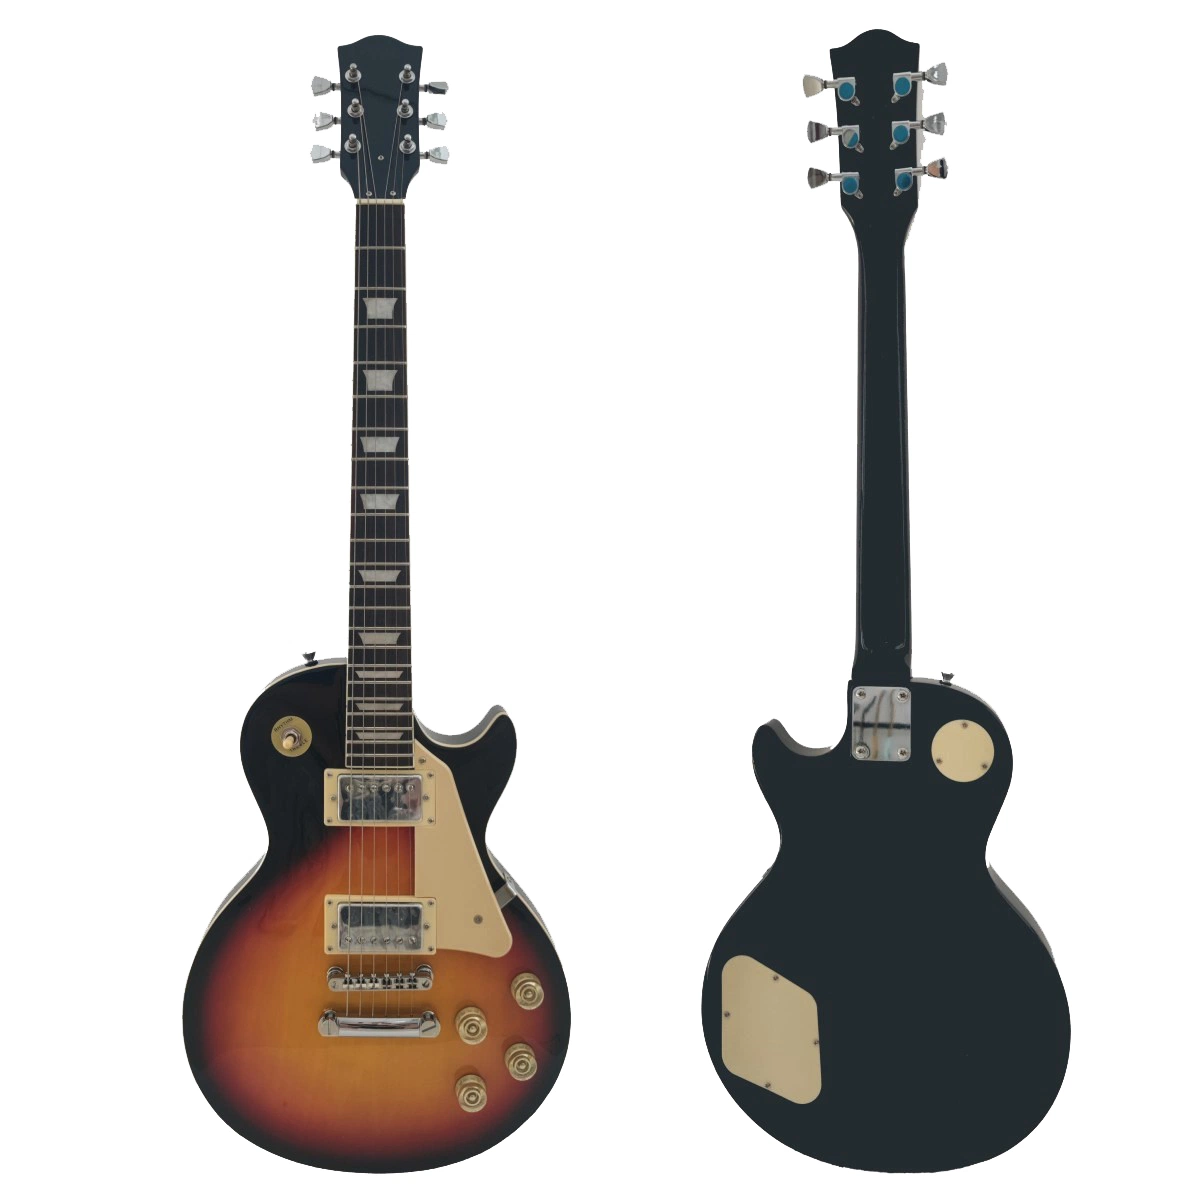 Fje420 Les Paul LP Electric Guitar Standard Top Wholesale Musical Instruments China Guitar Factory хорошее качество OEM Оптовая продажа ODM